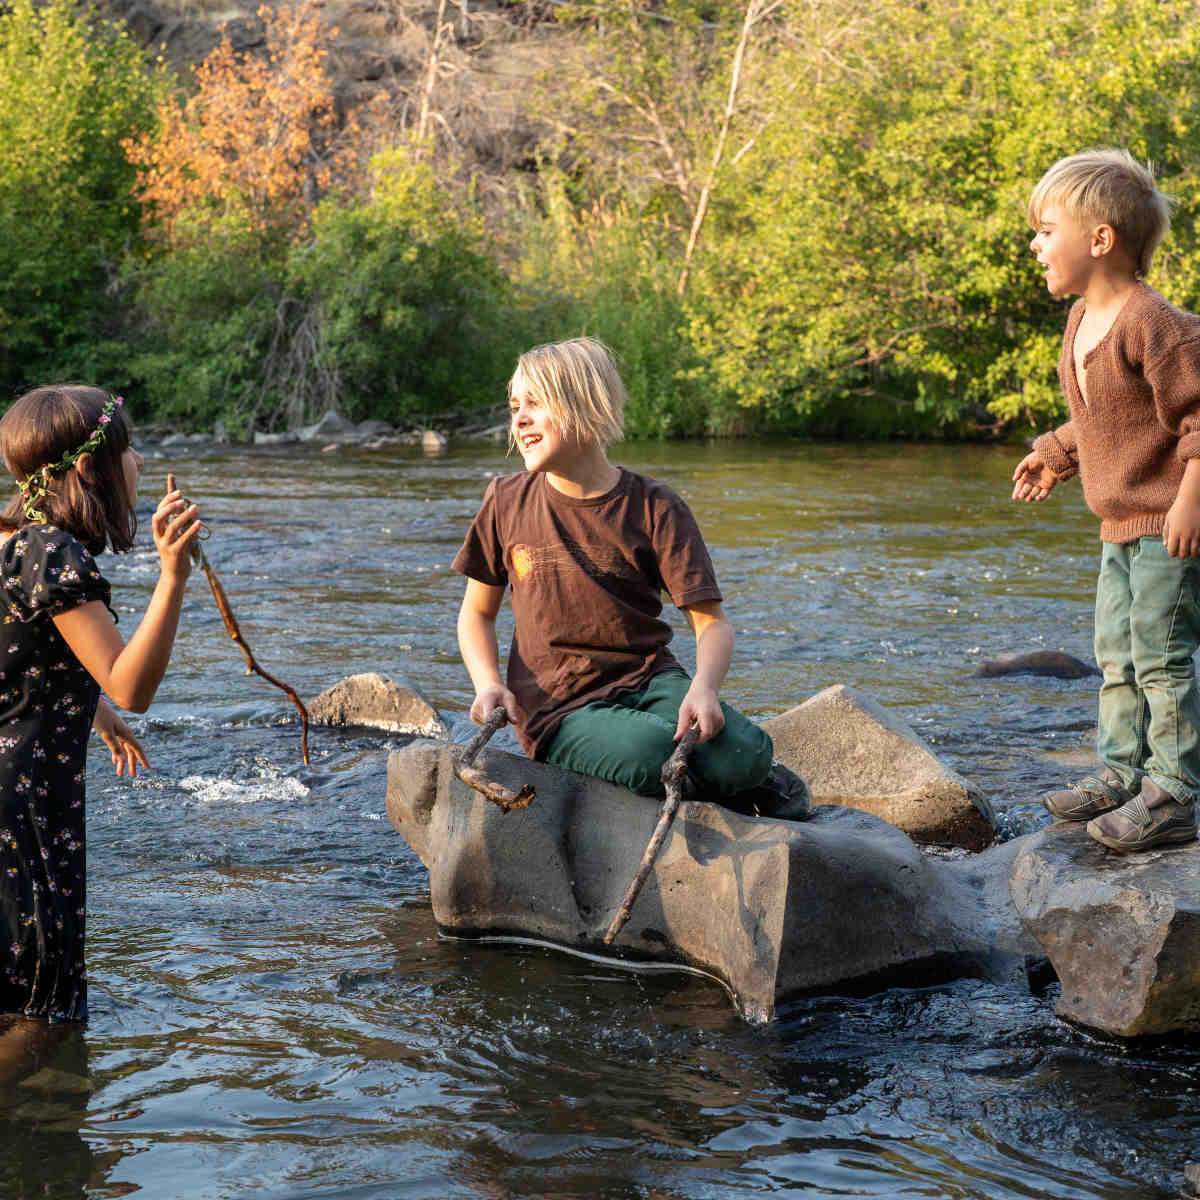 Kids in river at summer camp in Bend, Oregon